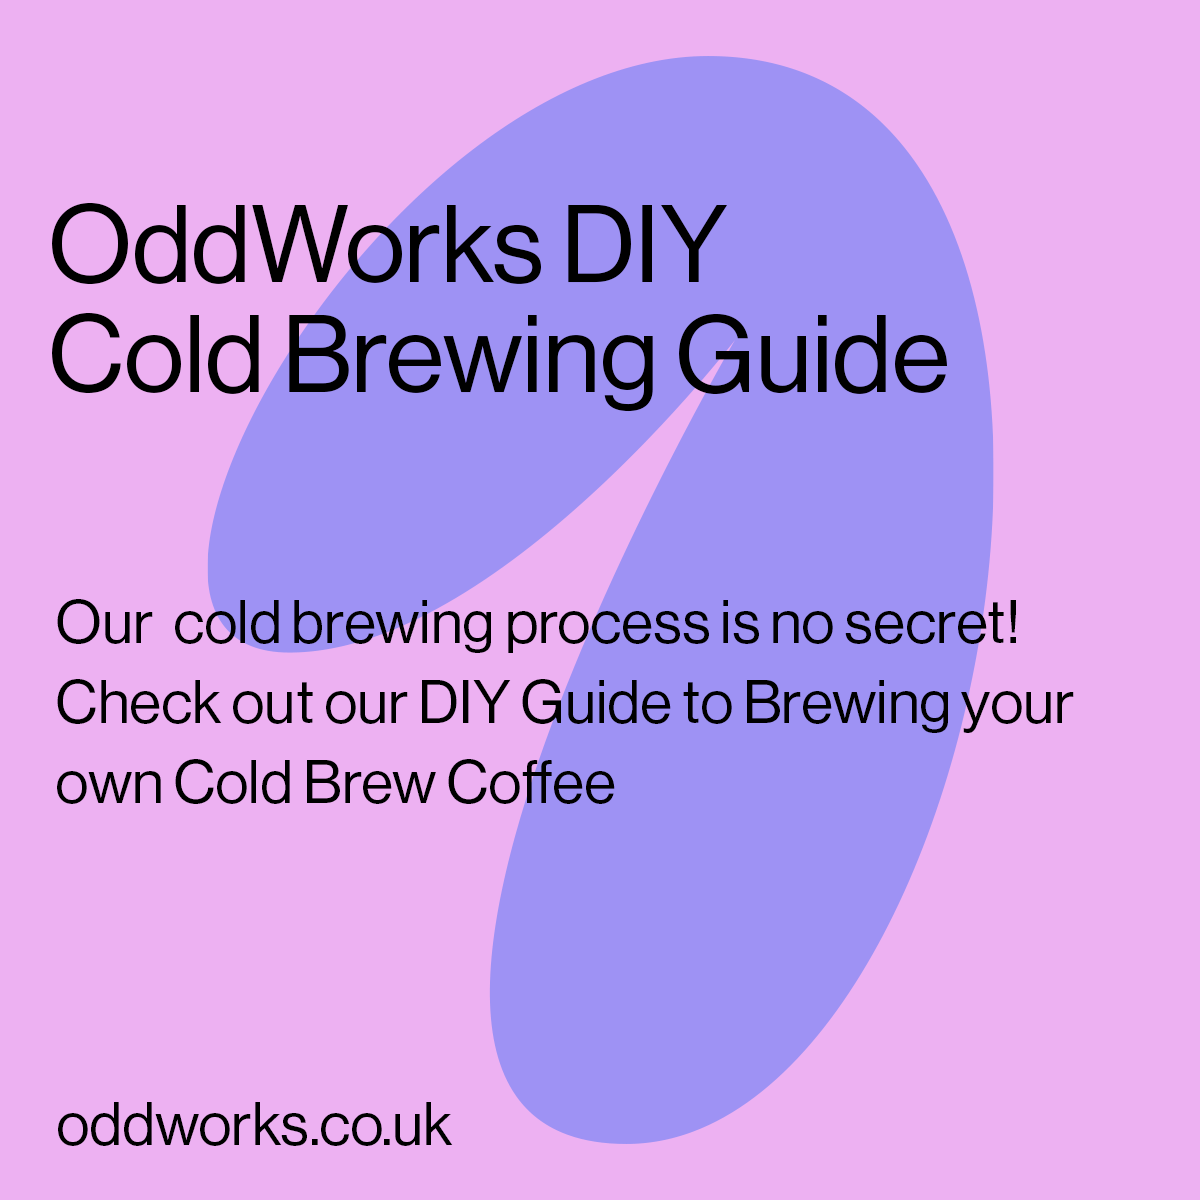 Blog #1 OddWorks DIY Cold Brewing Guide